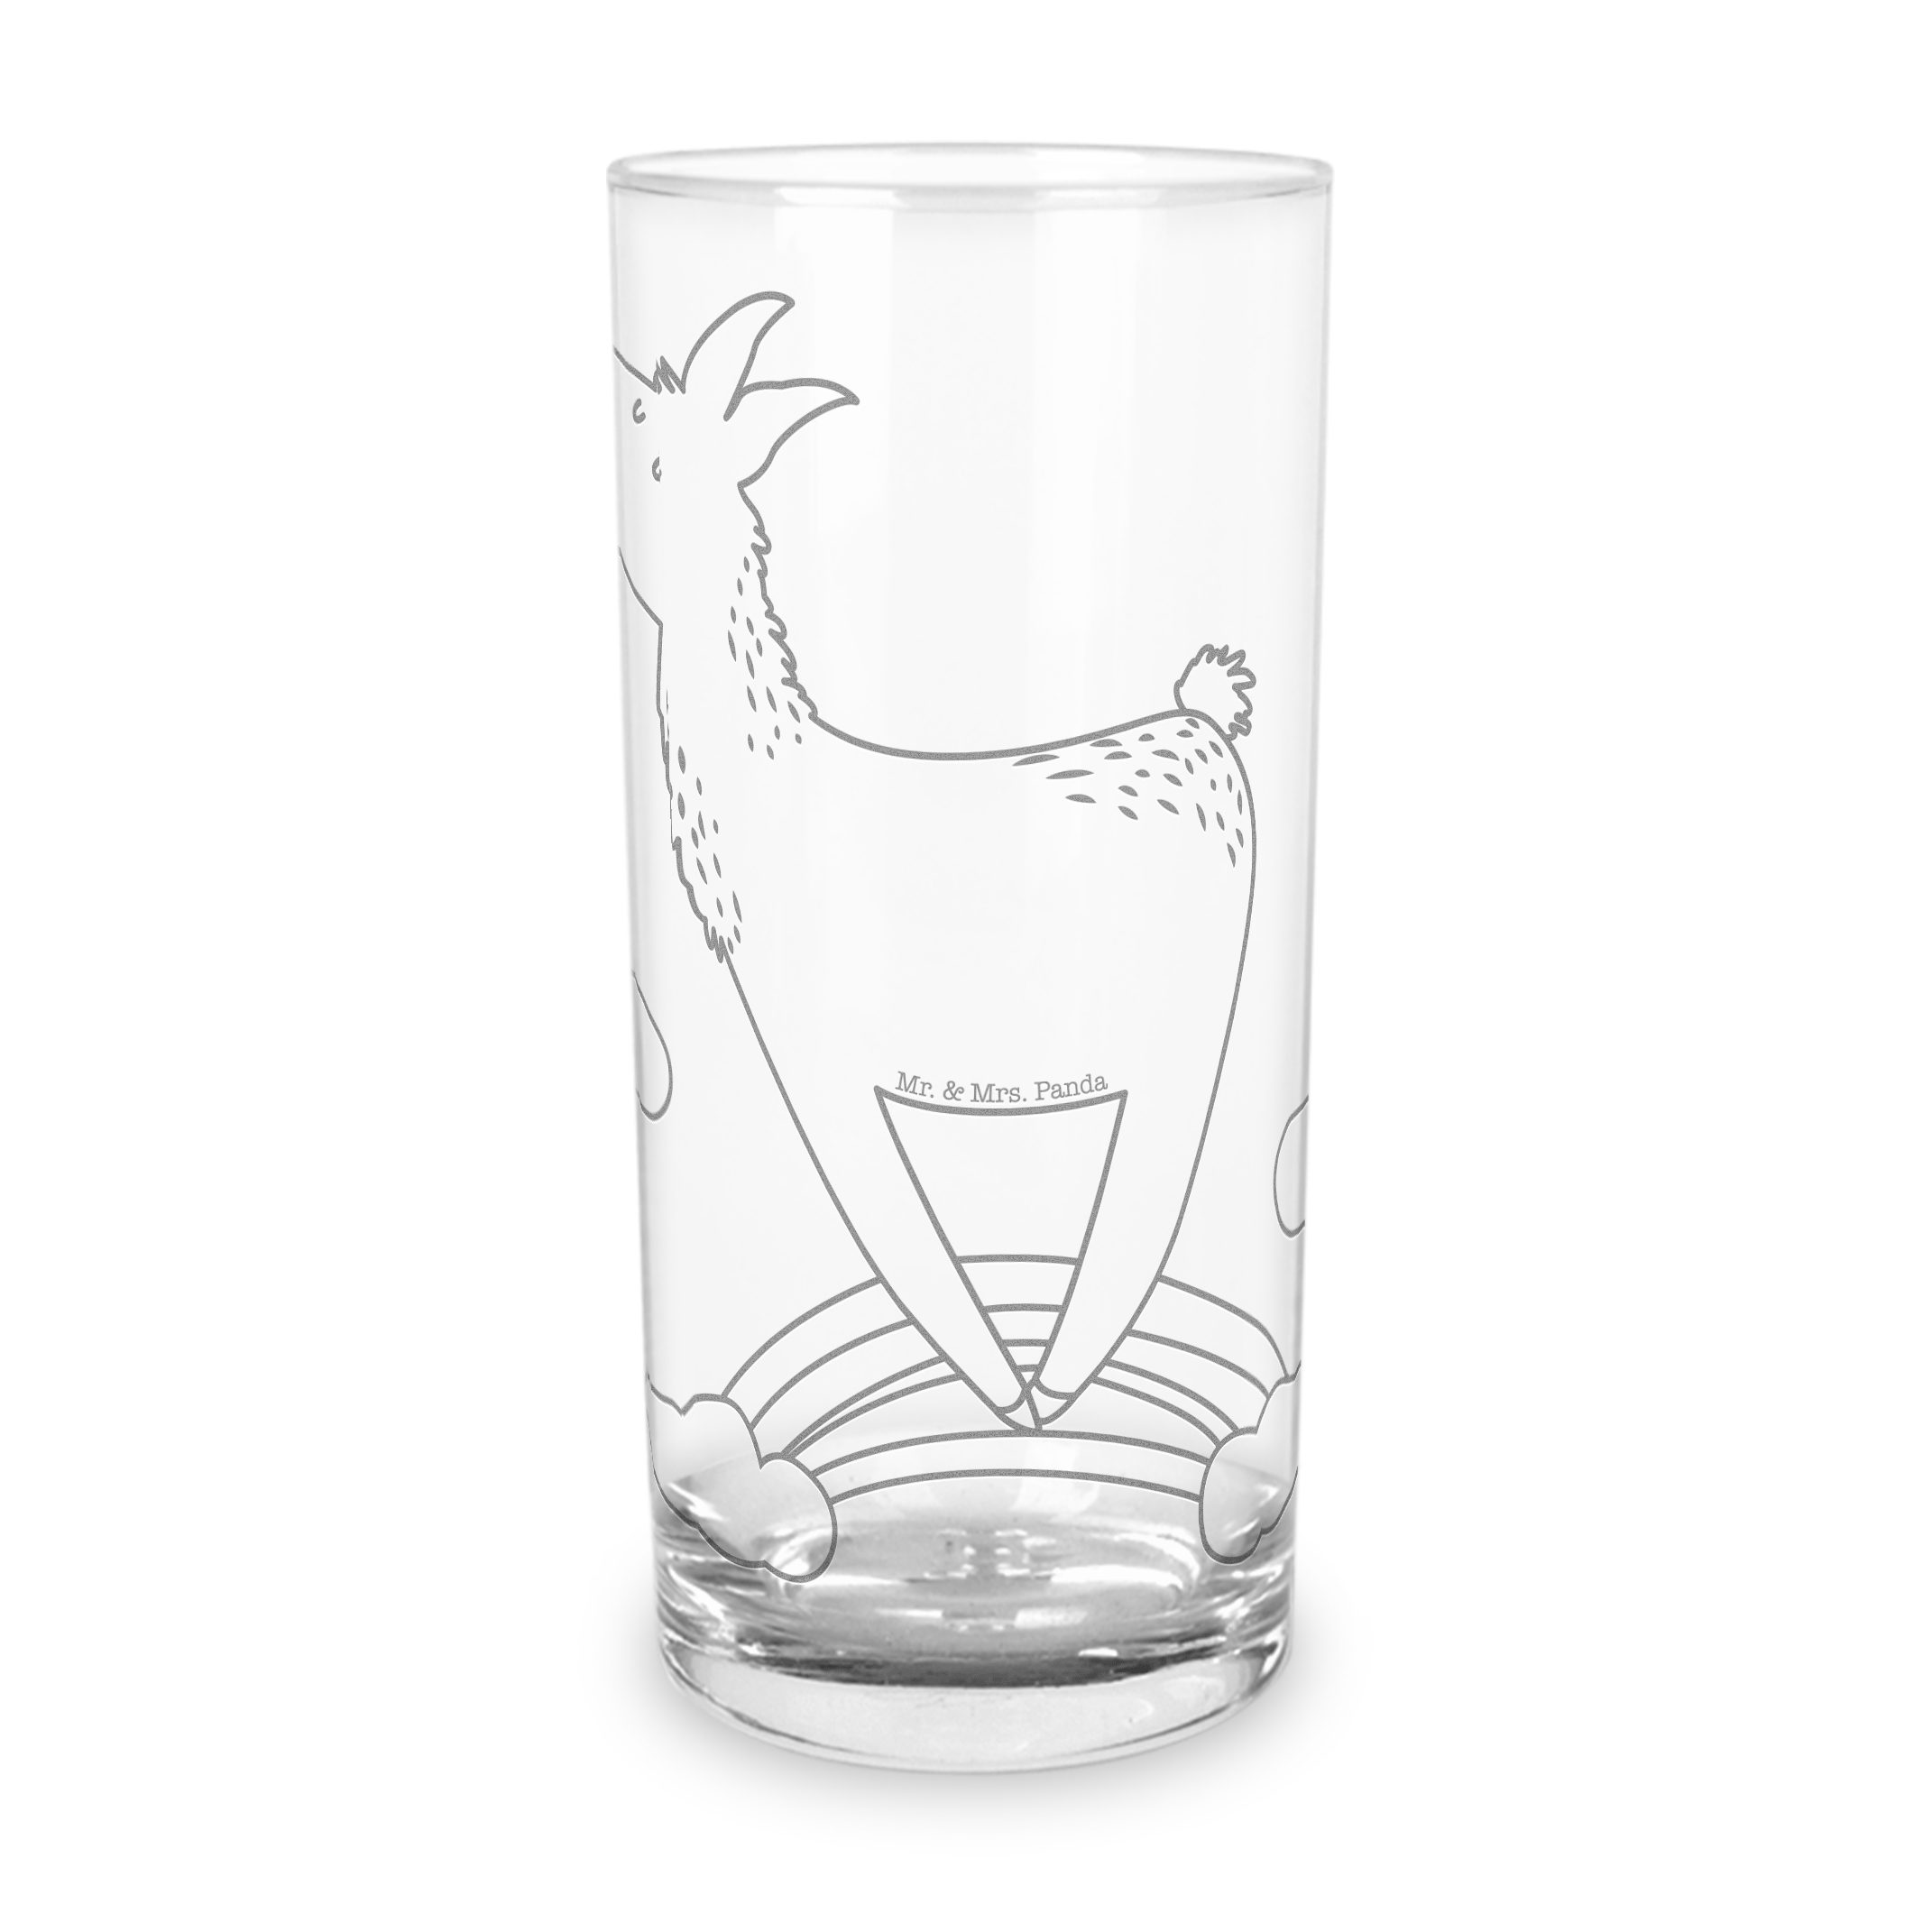 Mr. & Mrs. Panda Glas 200 ml Lama Regenbogen - Transparent - Geschenk, Abi, Trinkglas, Wass, Premium Glas, Magische Gravuren